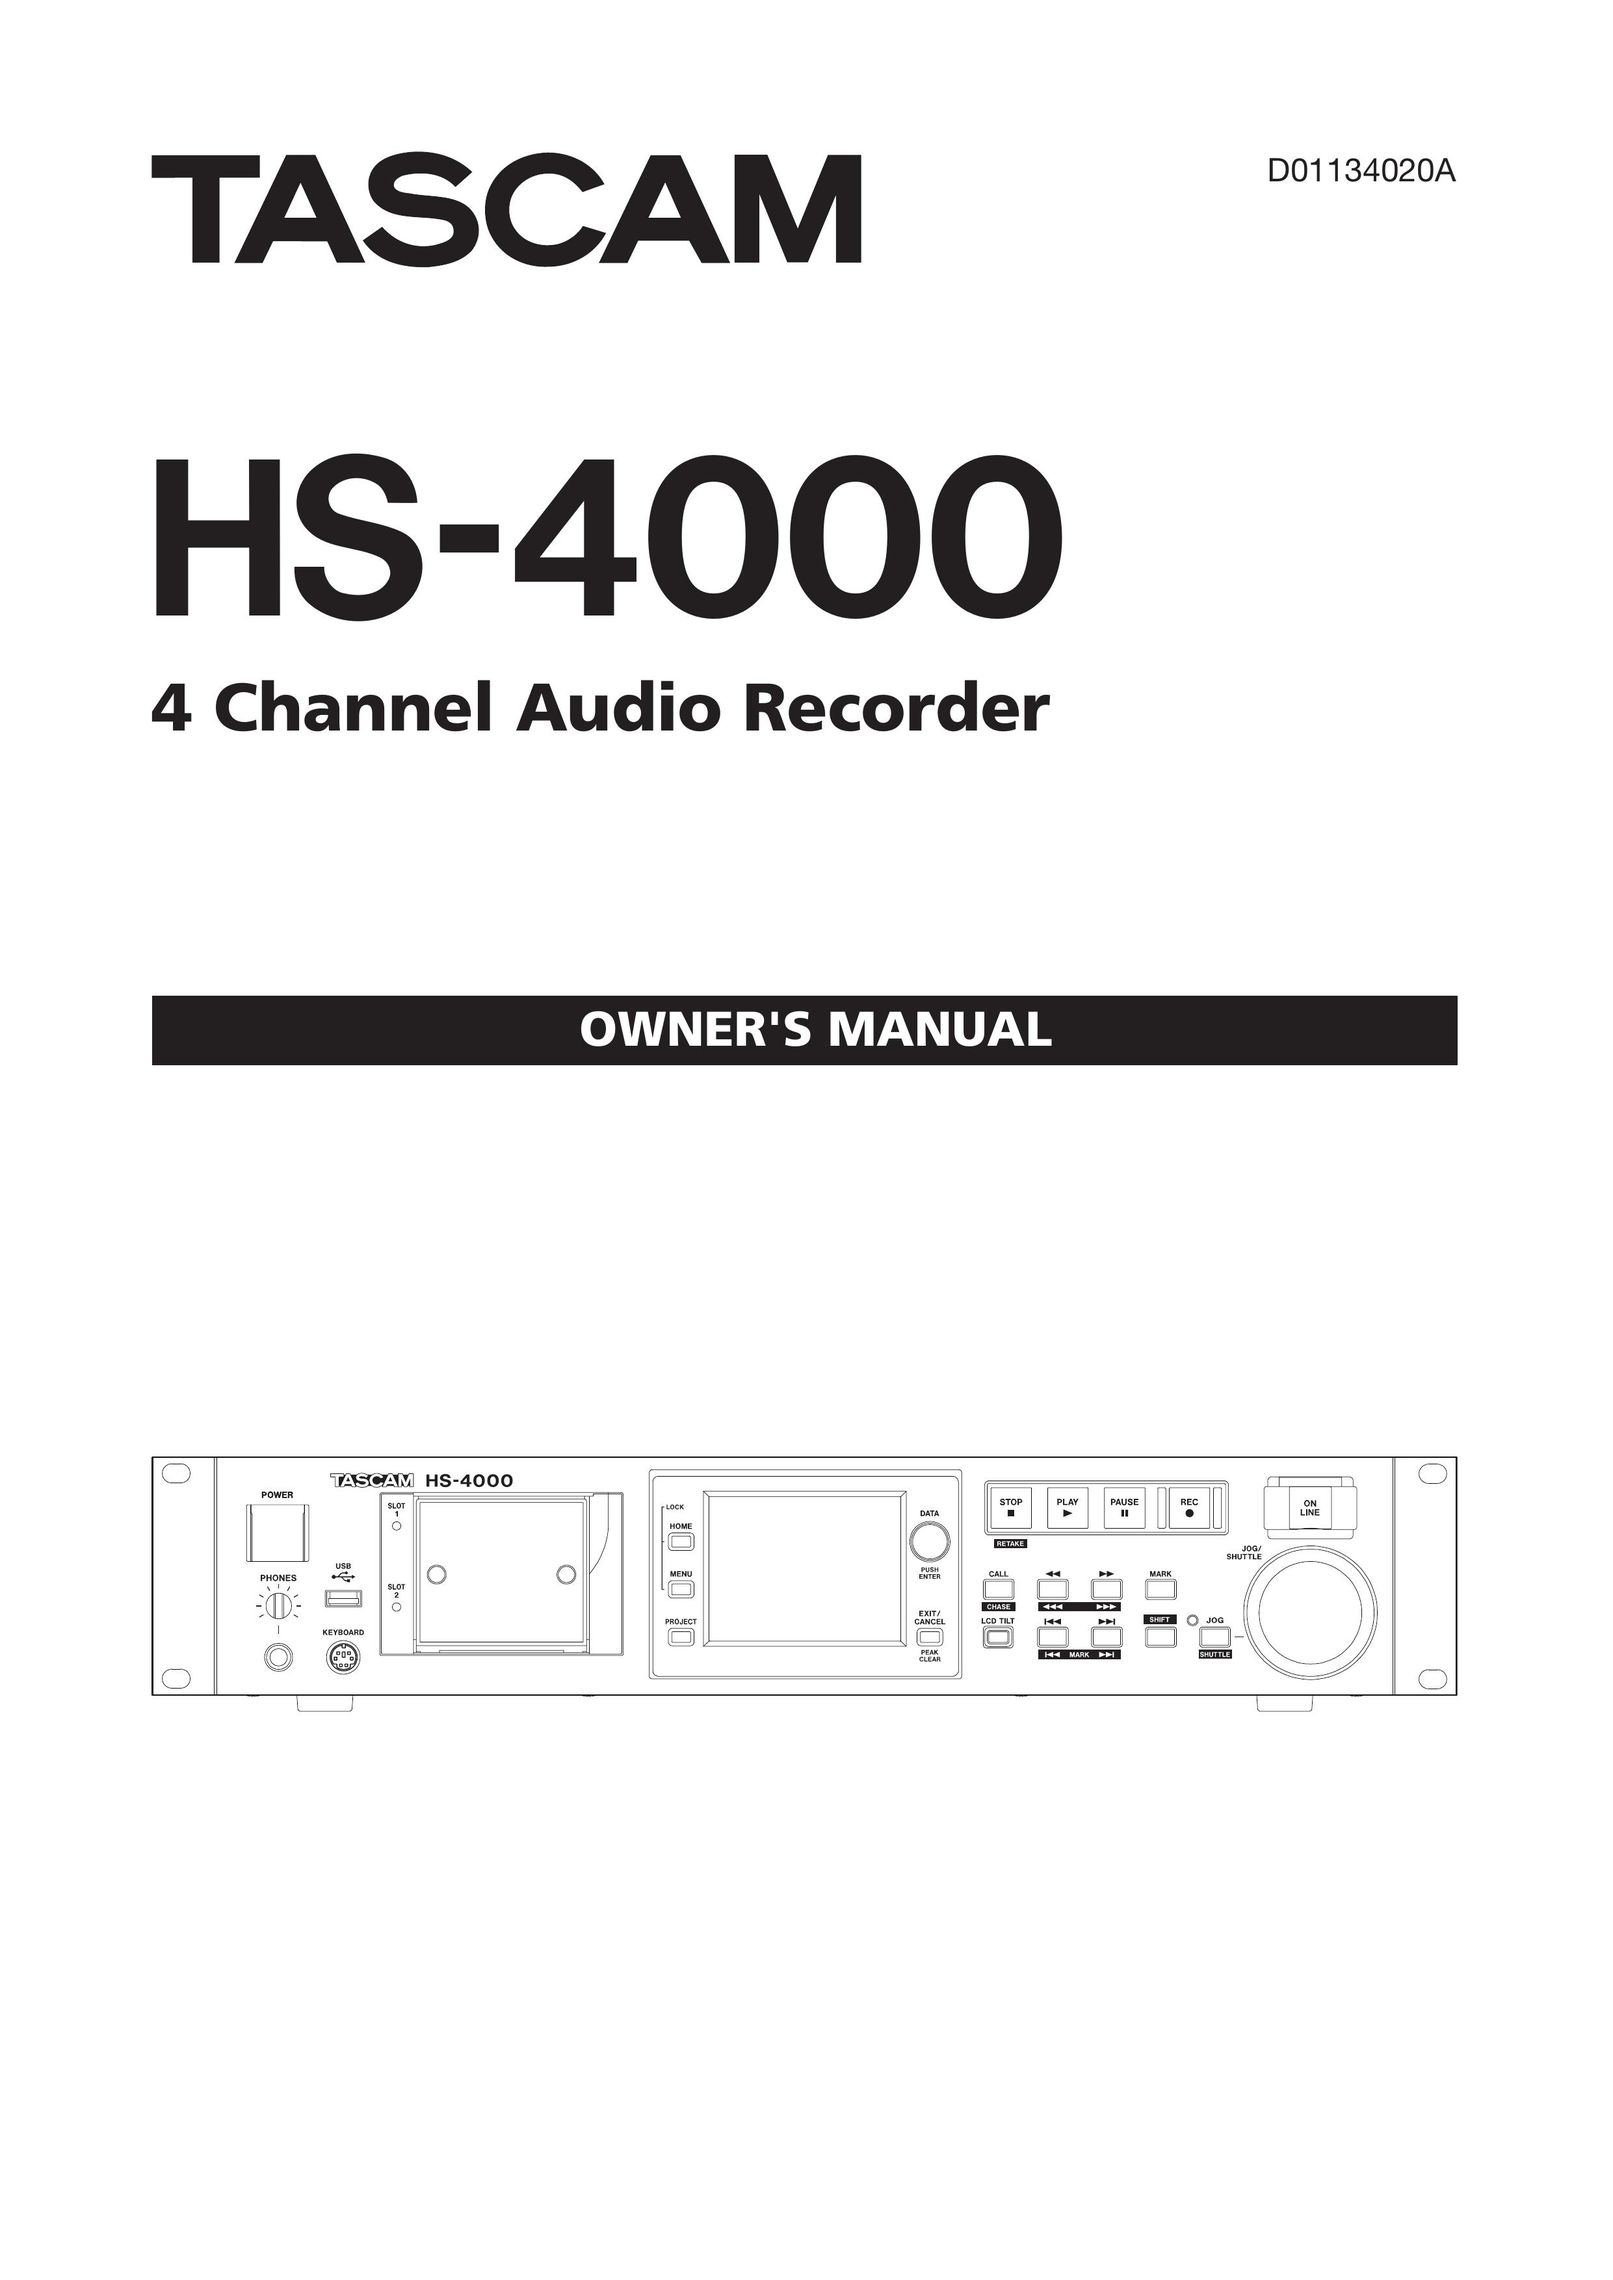 Tascam HS-4000 MP3 Player User Manual